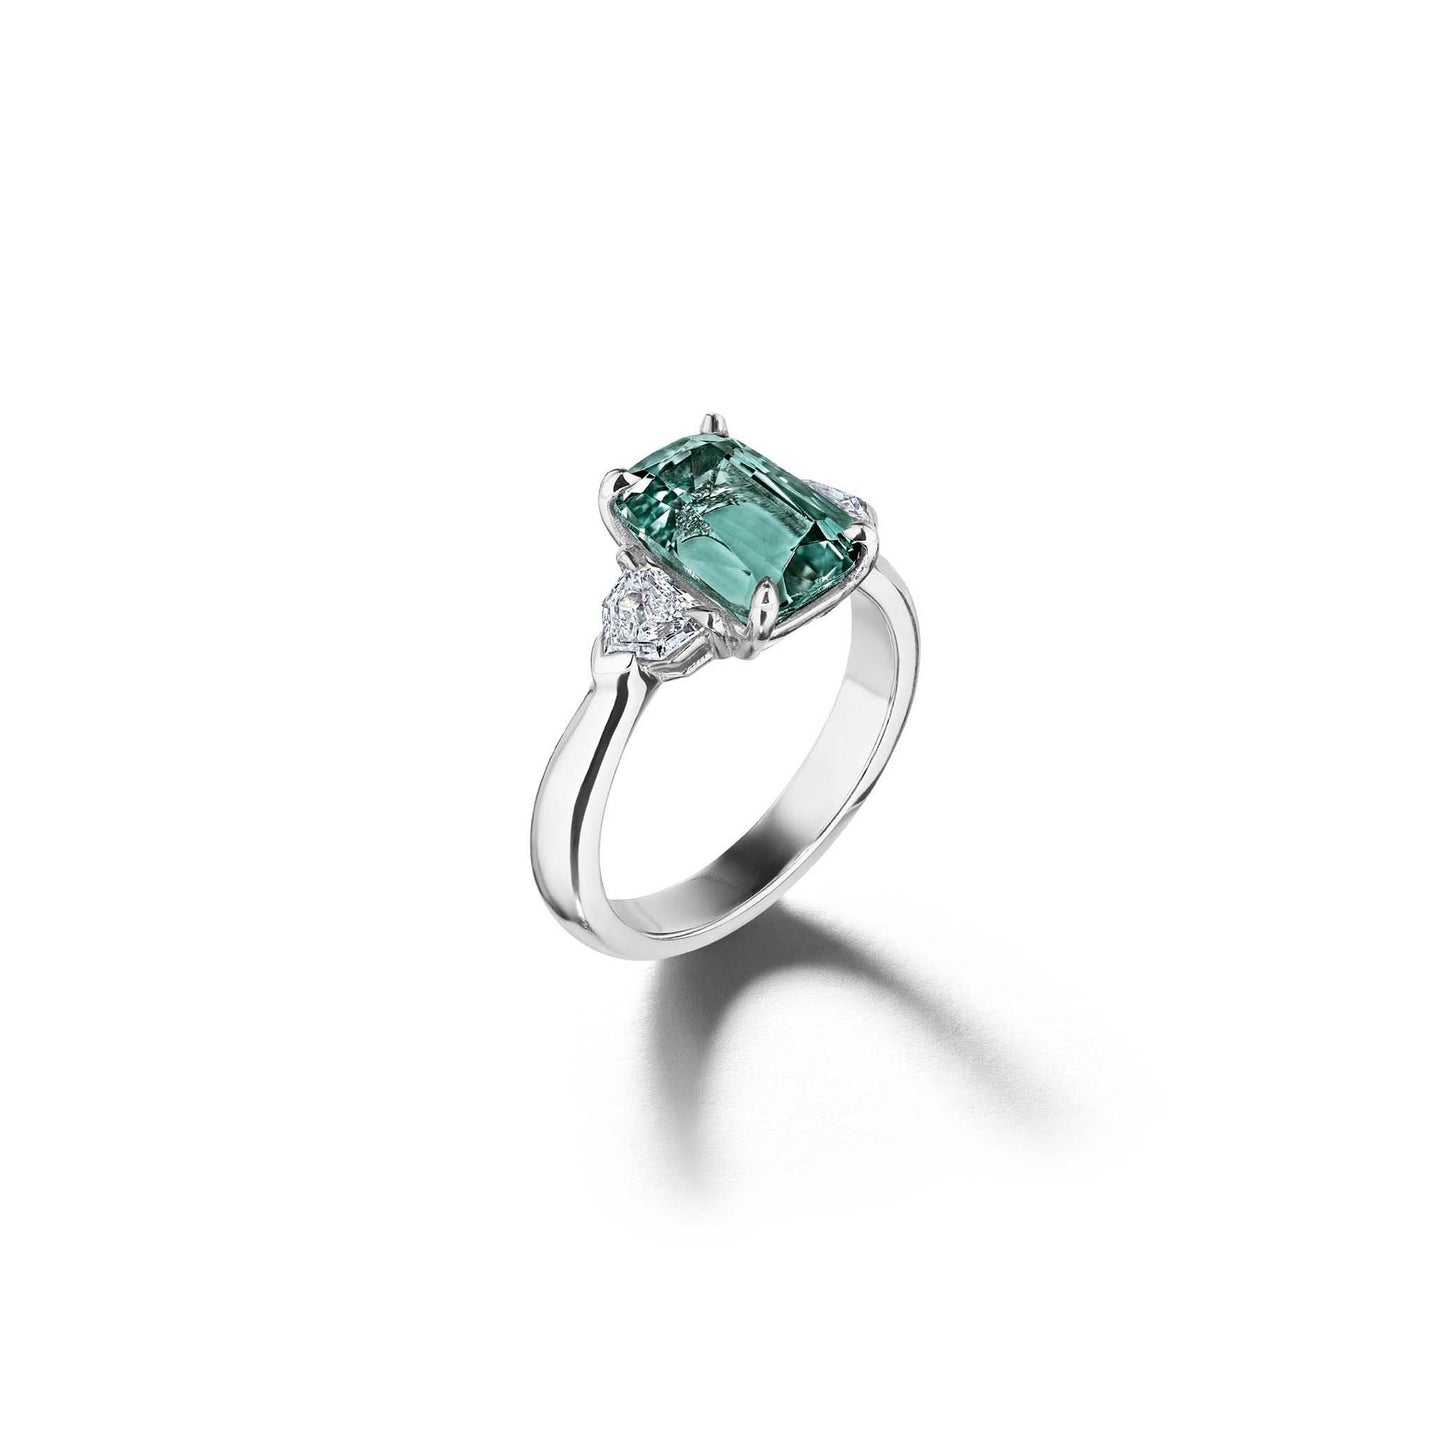 Grand Green Tourmaline Engagement Ring